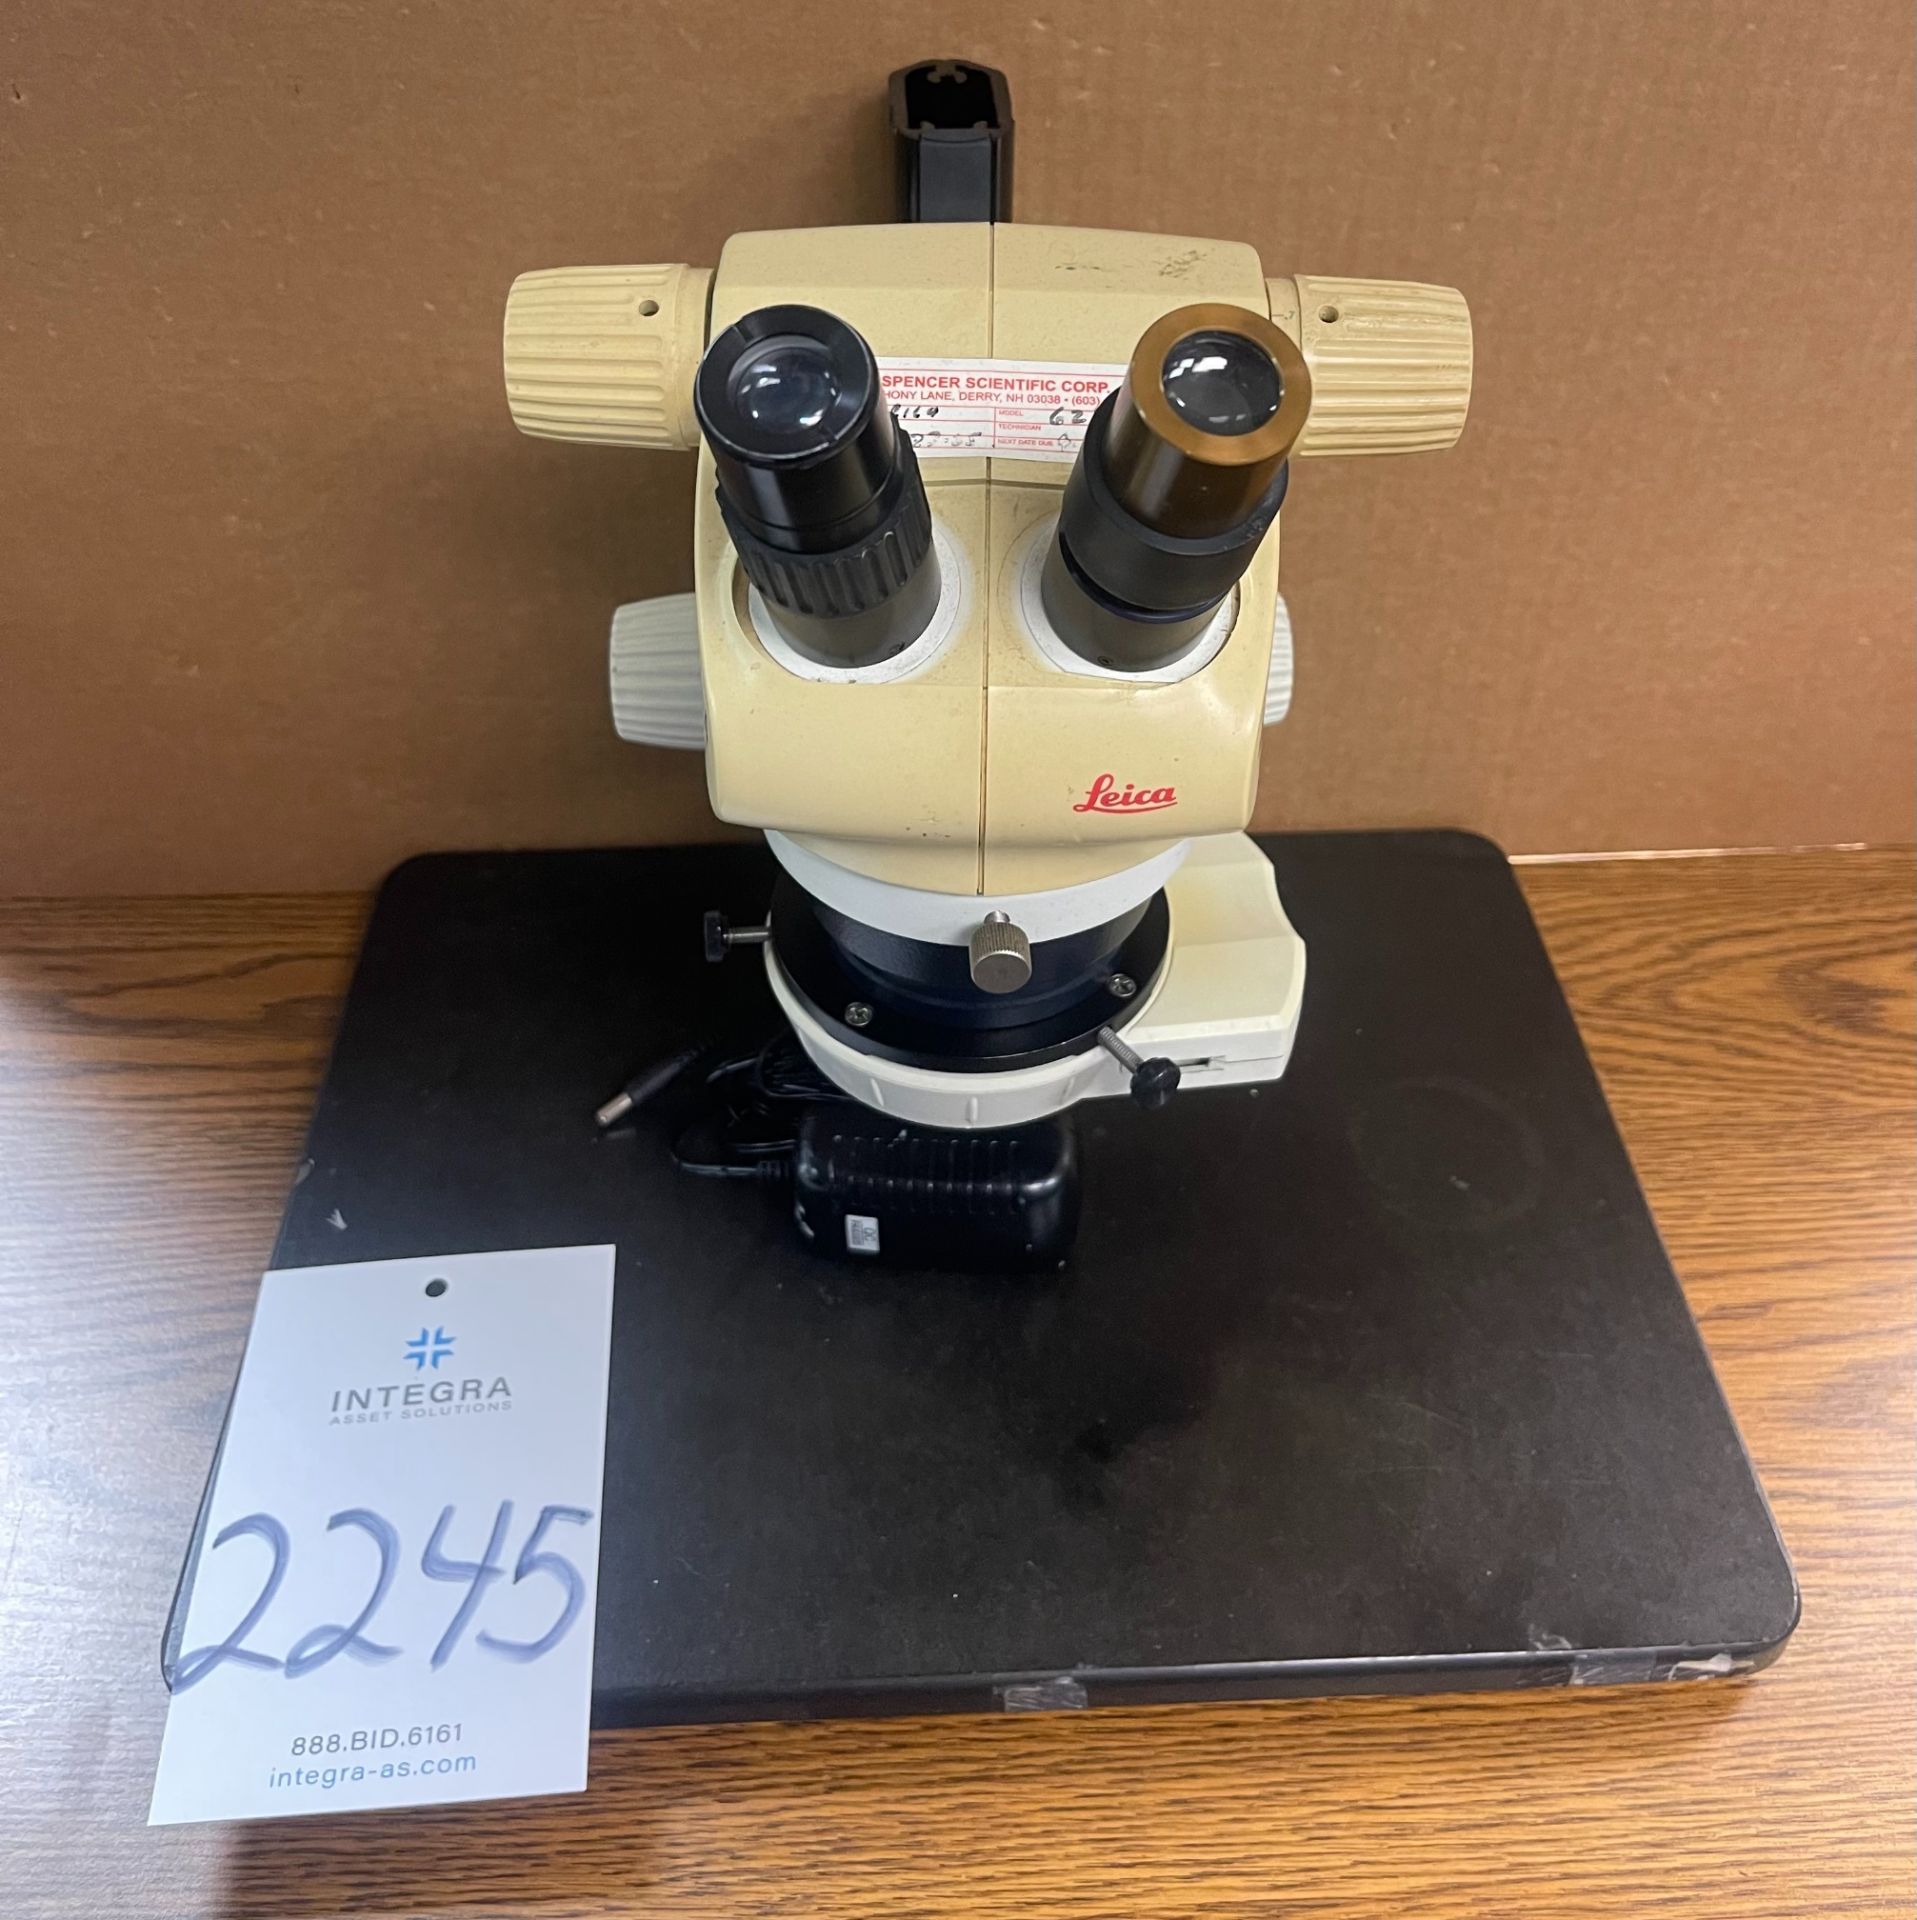 Leica GZ4 Stereo Microscope